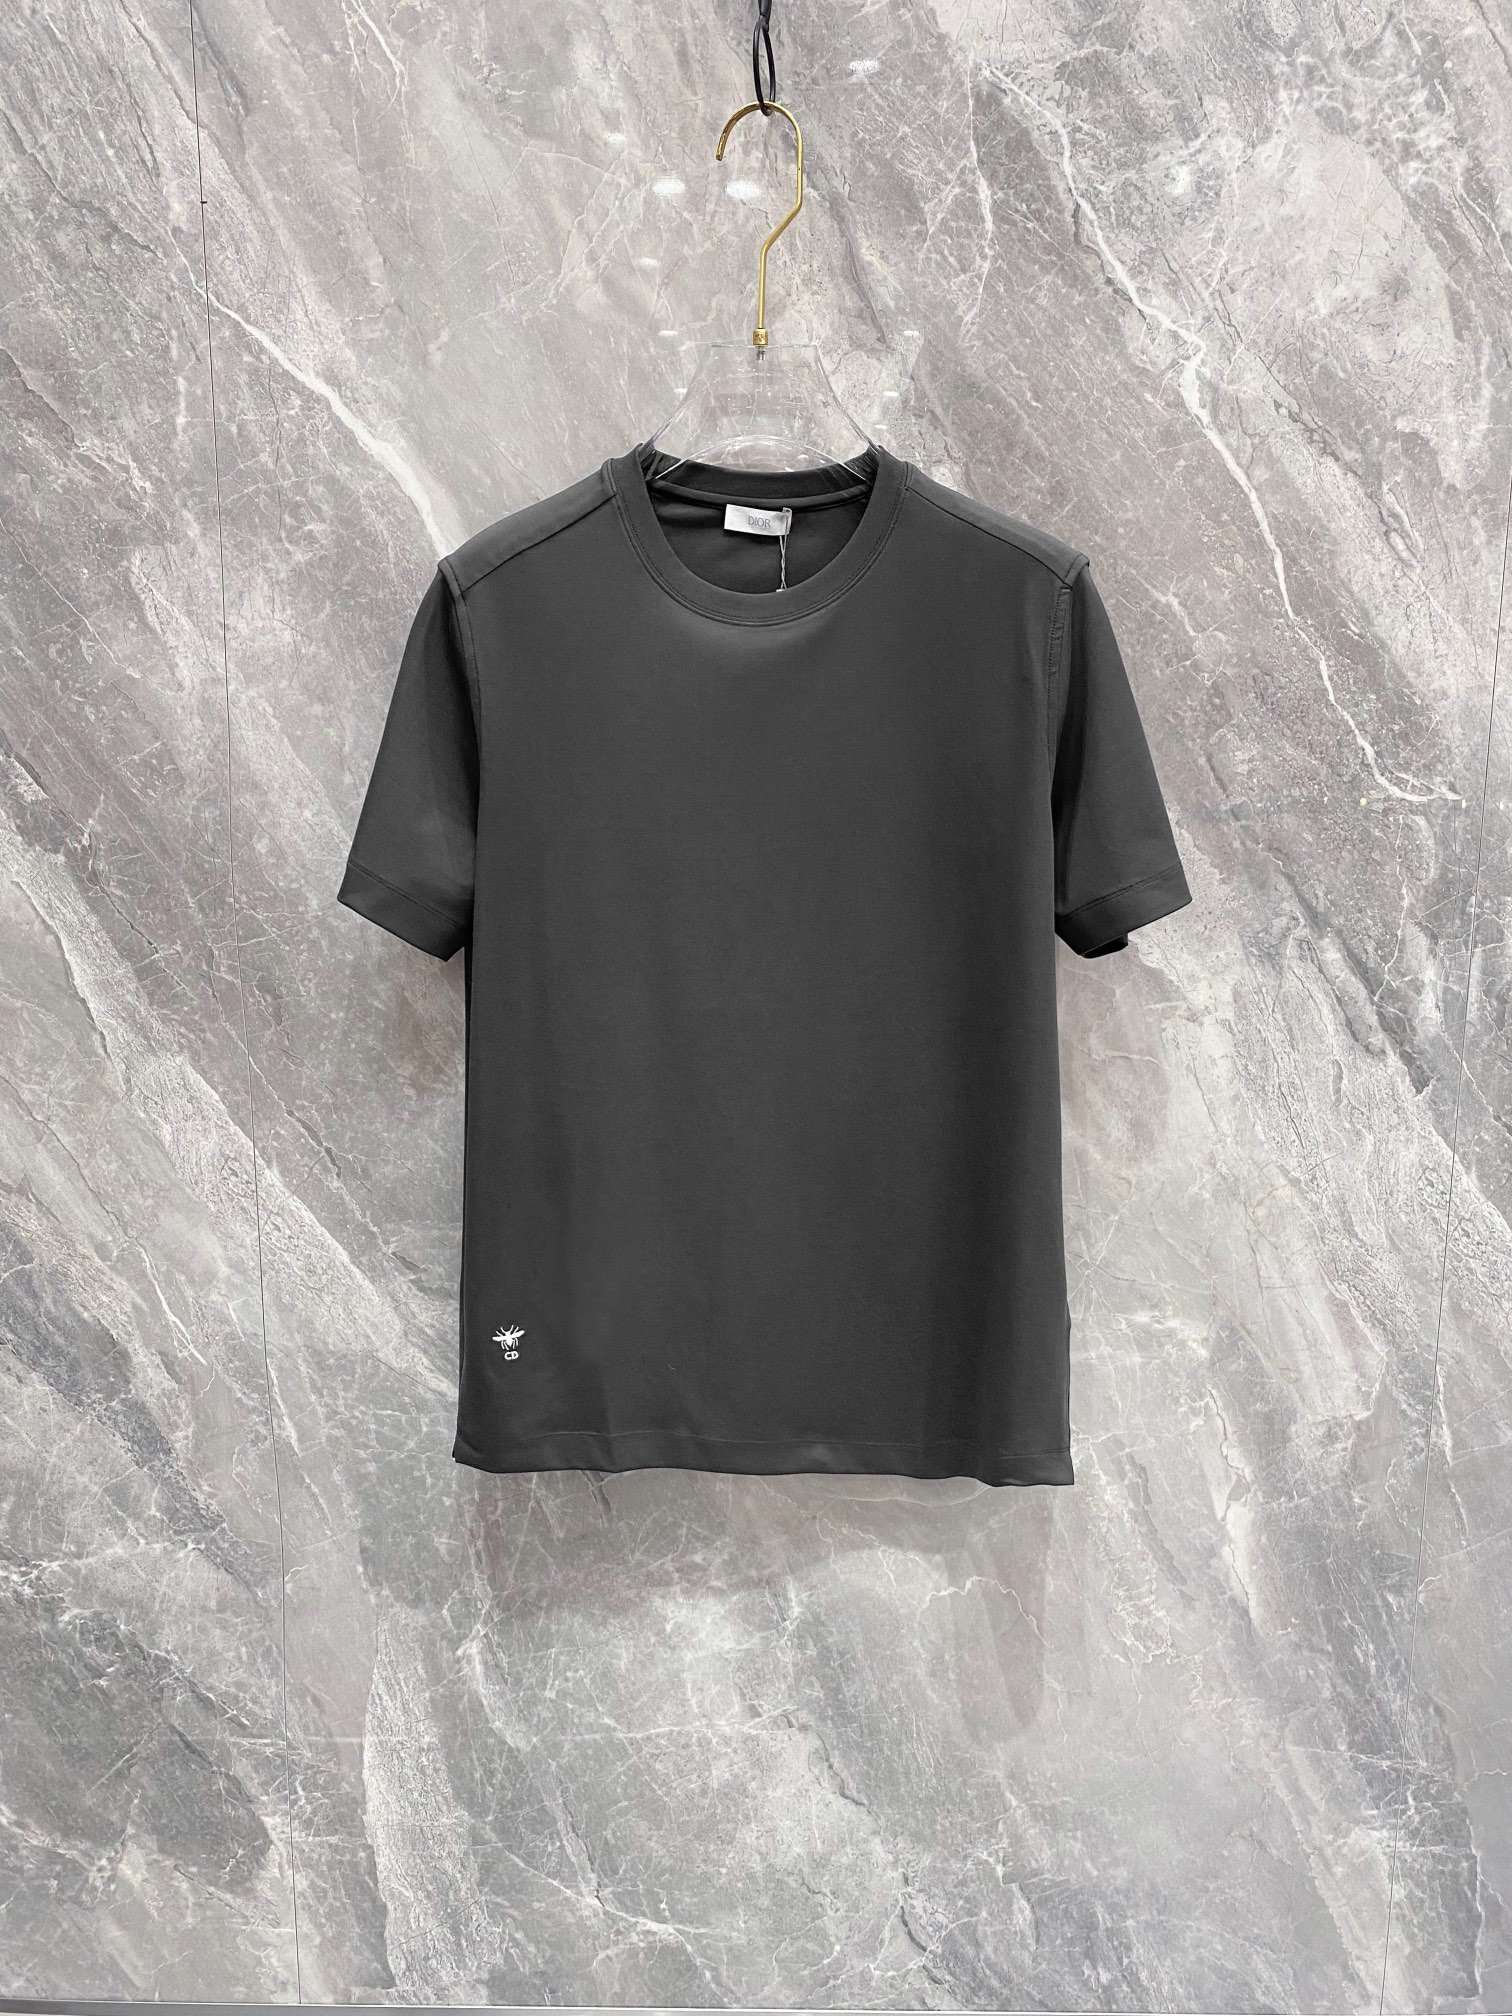 Dior mirror quality
 Clothing T-Shirt Online China
 Unisex Cotton Short Sleeve